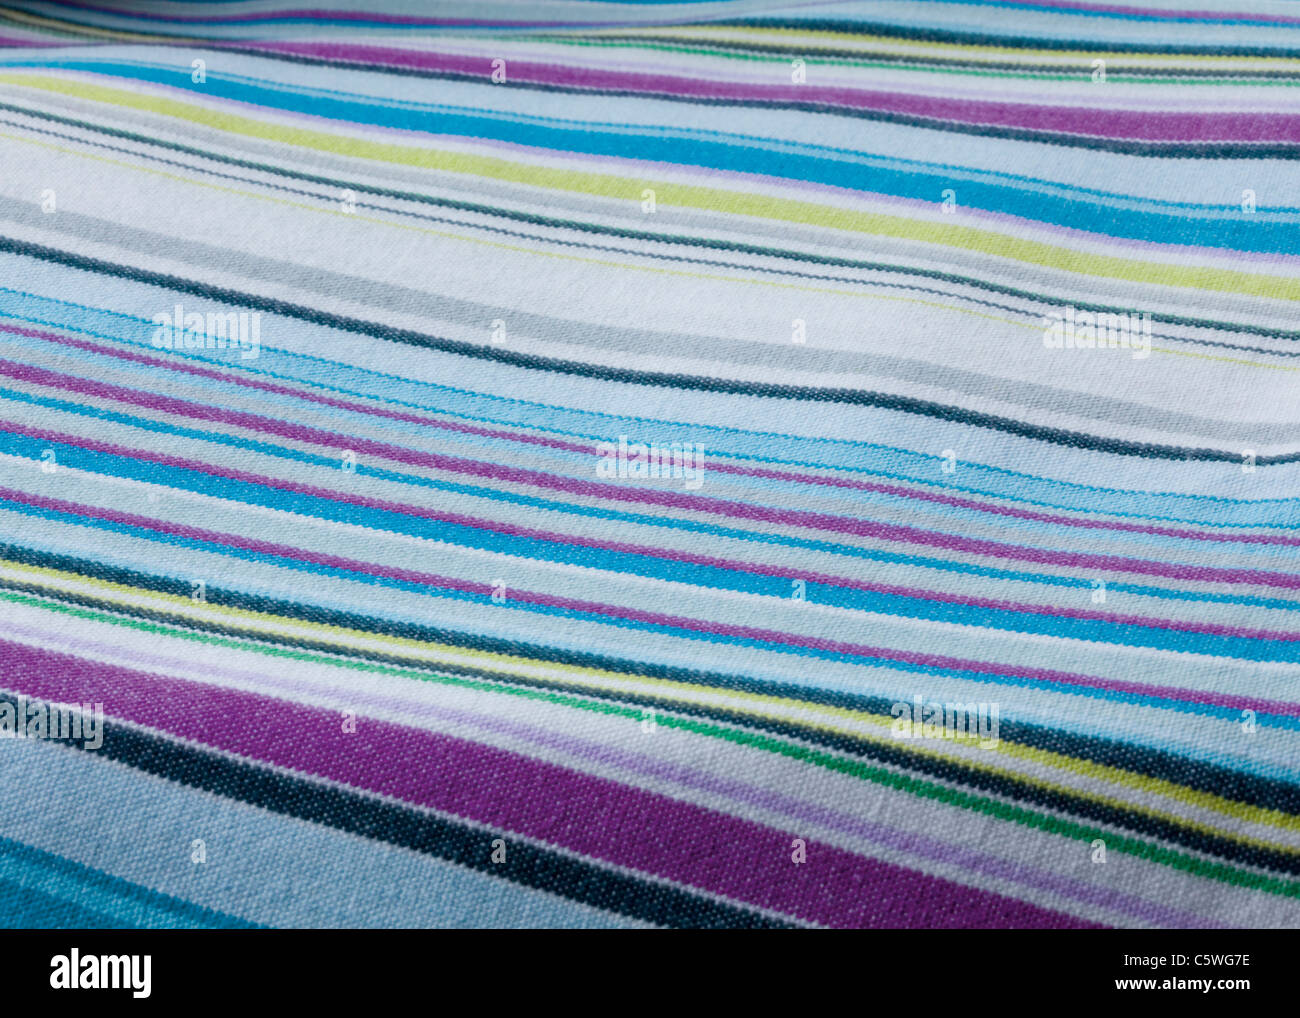 Tela de rayas de colores fotografías e imágenes de alta resolución - Alamy